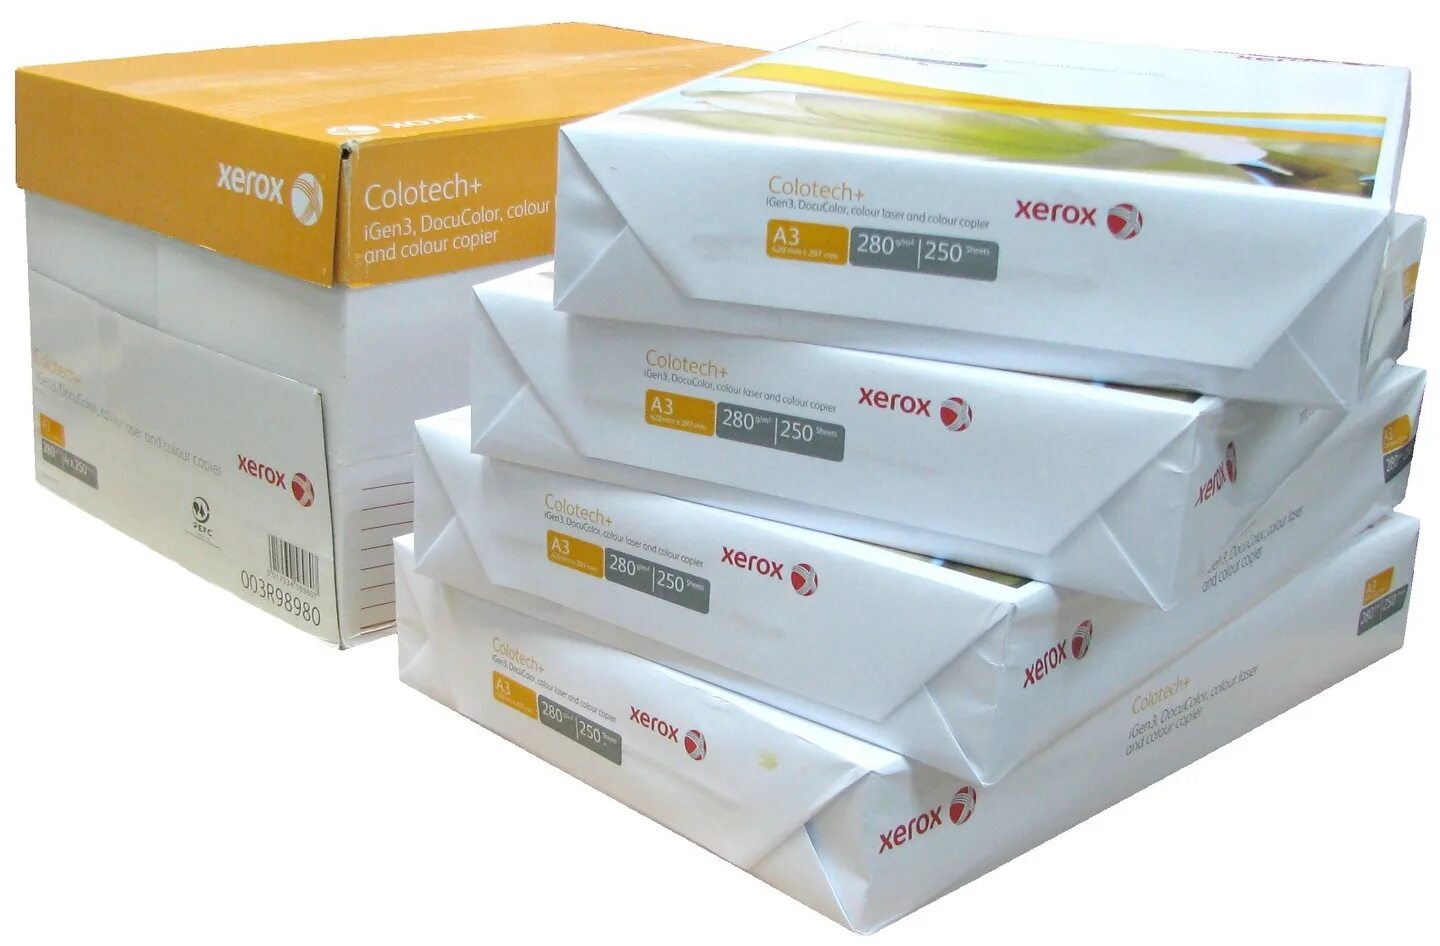 Бумага Xerox Colotech Plus, а3, 280 г/м2, 250 л. Бумага Xerox Colotech Plus a3, 280 г/м2. Бумага для принтера Xerox a3 250г/м2. Бумага Xerox Colotech Plus Gloss Coated a3 003r90349.